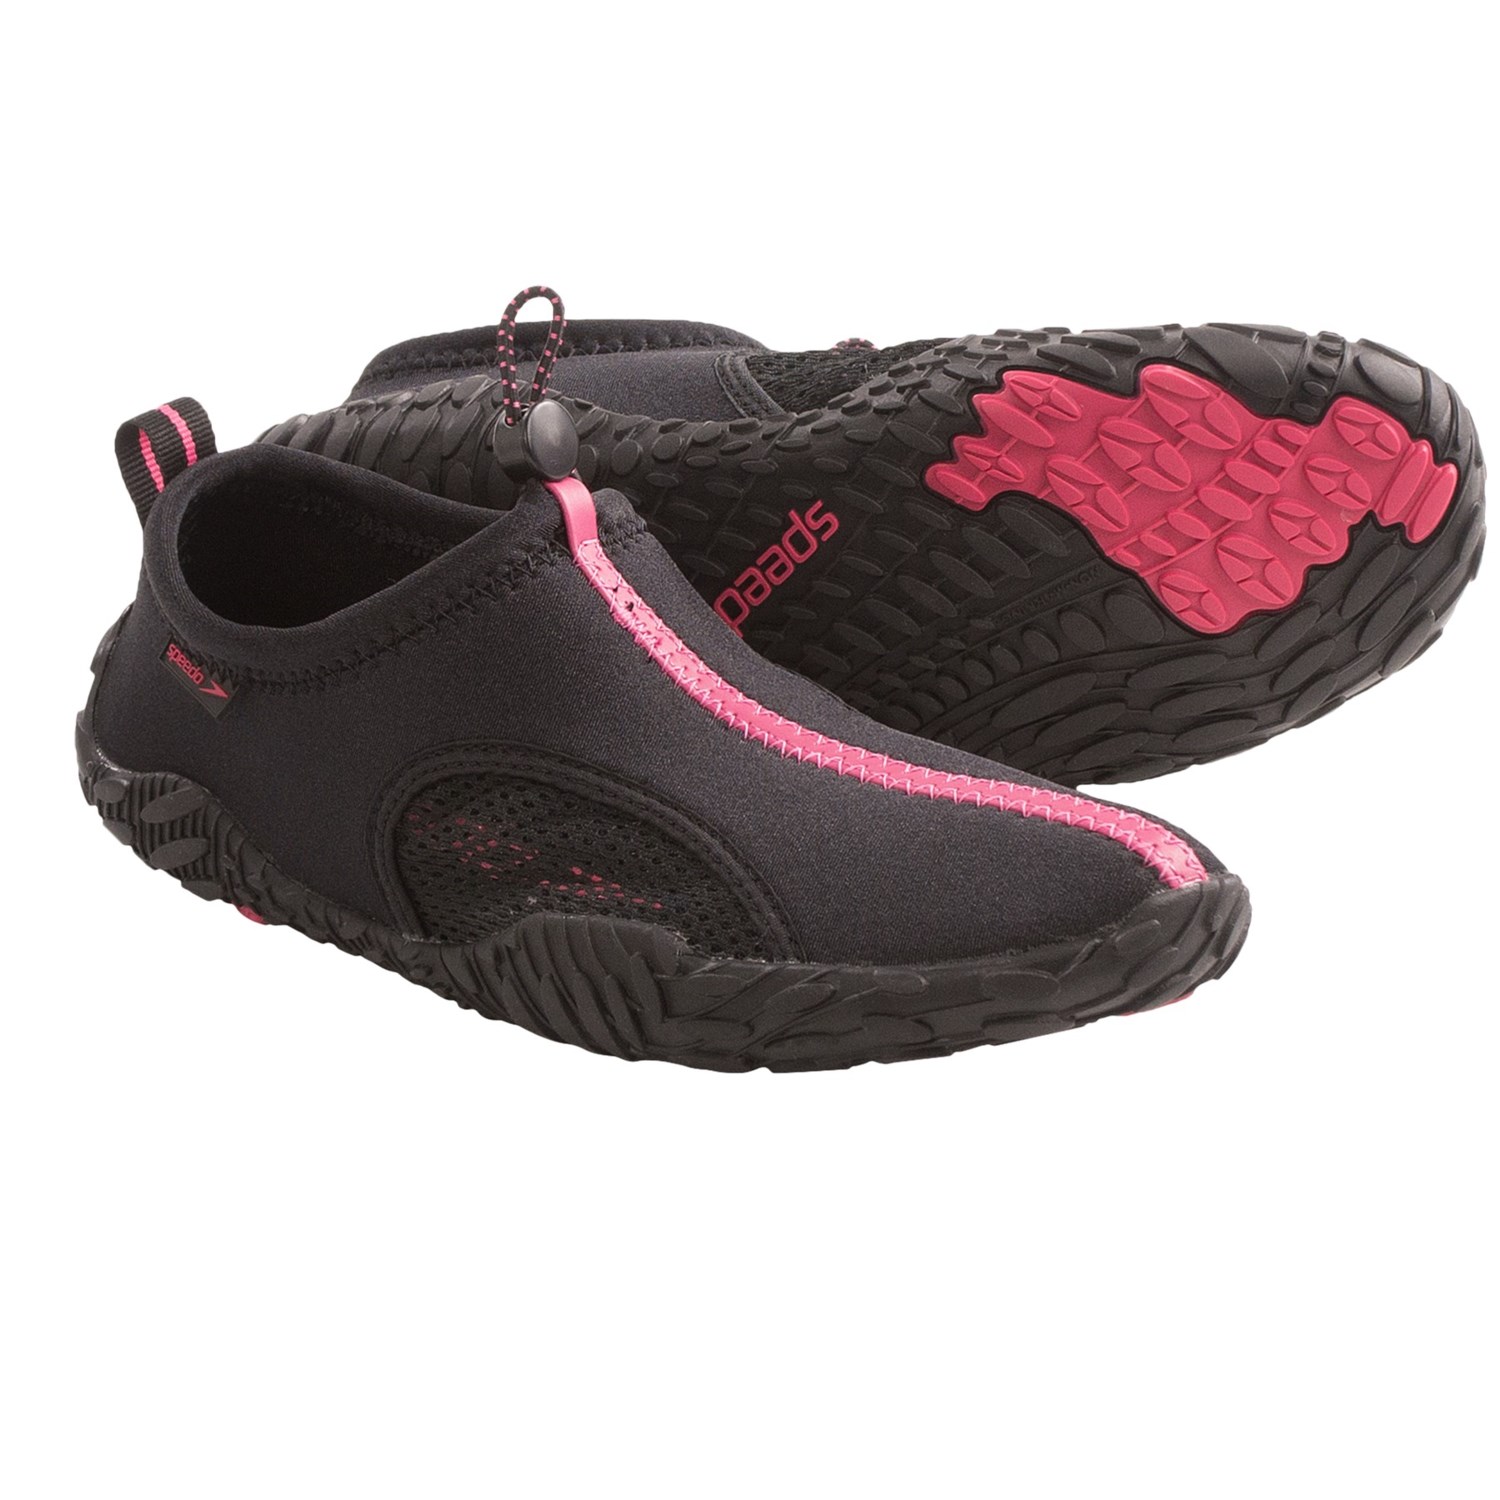 Speedo Shore Cruiser II Water Shoes (For Women) - Save 33%